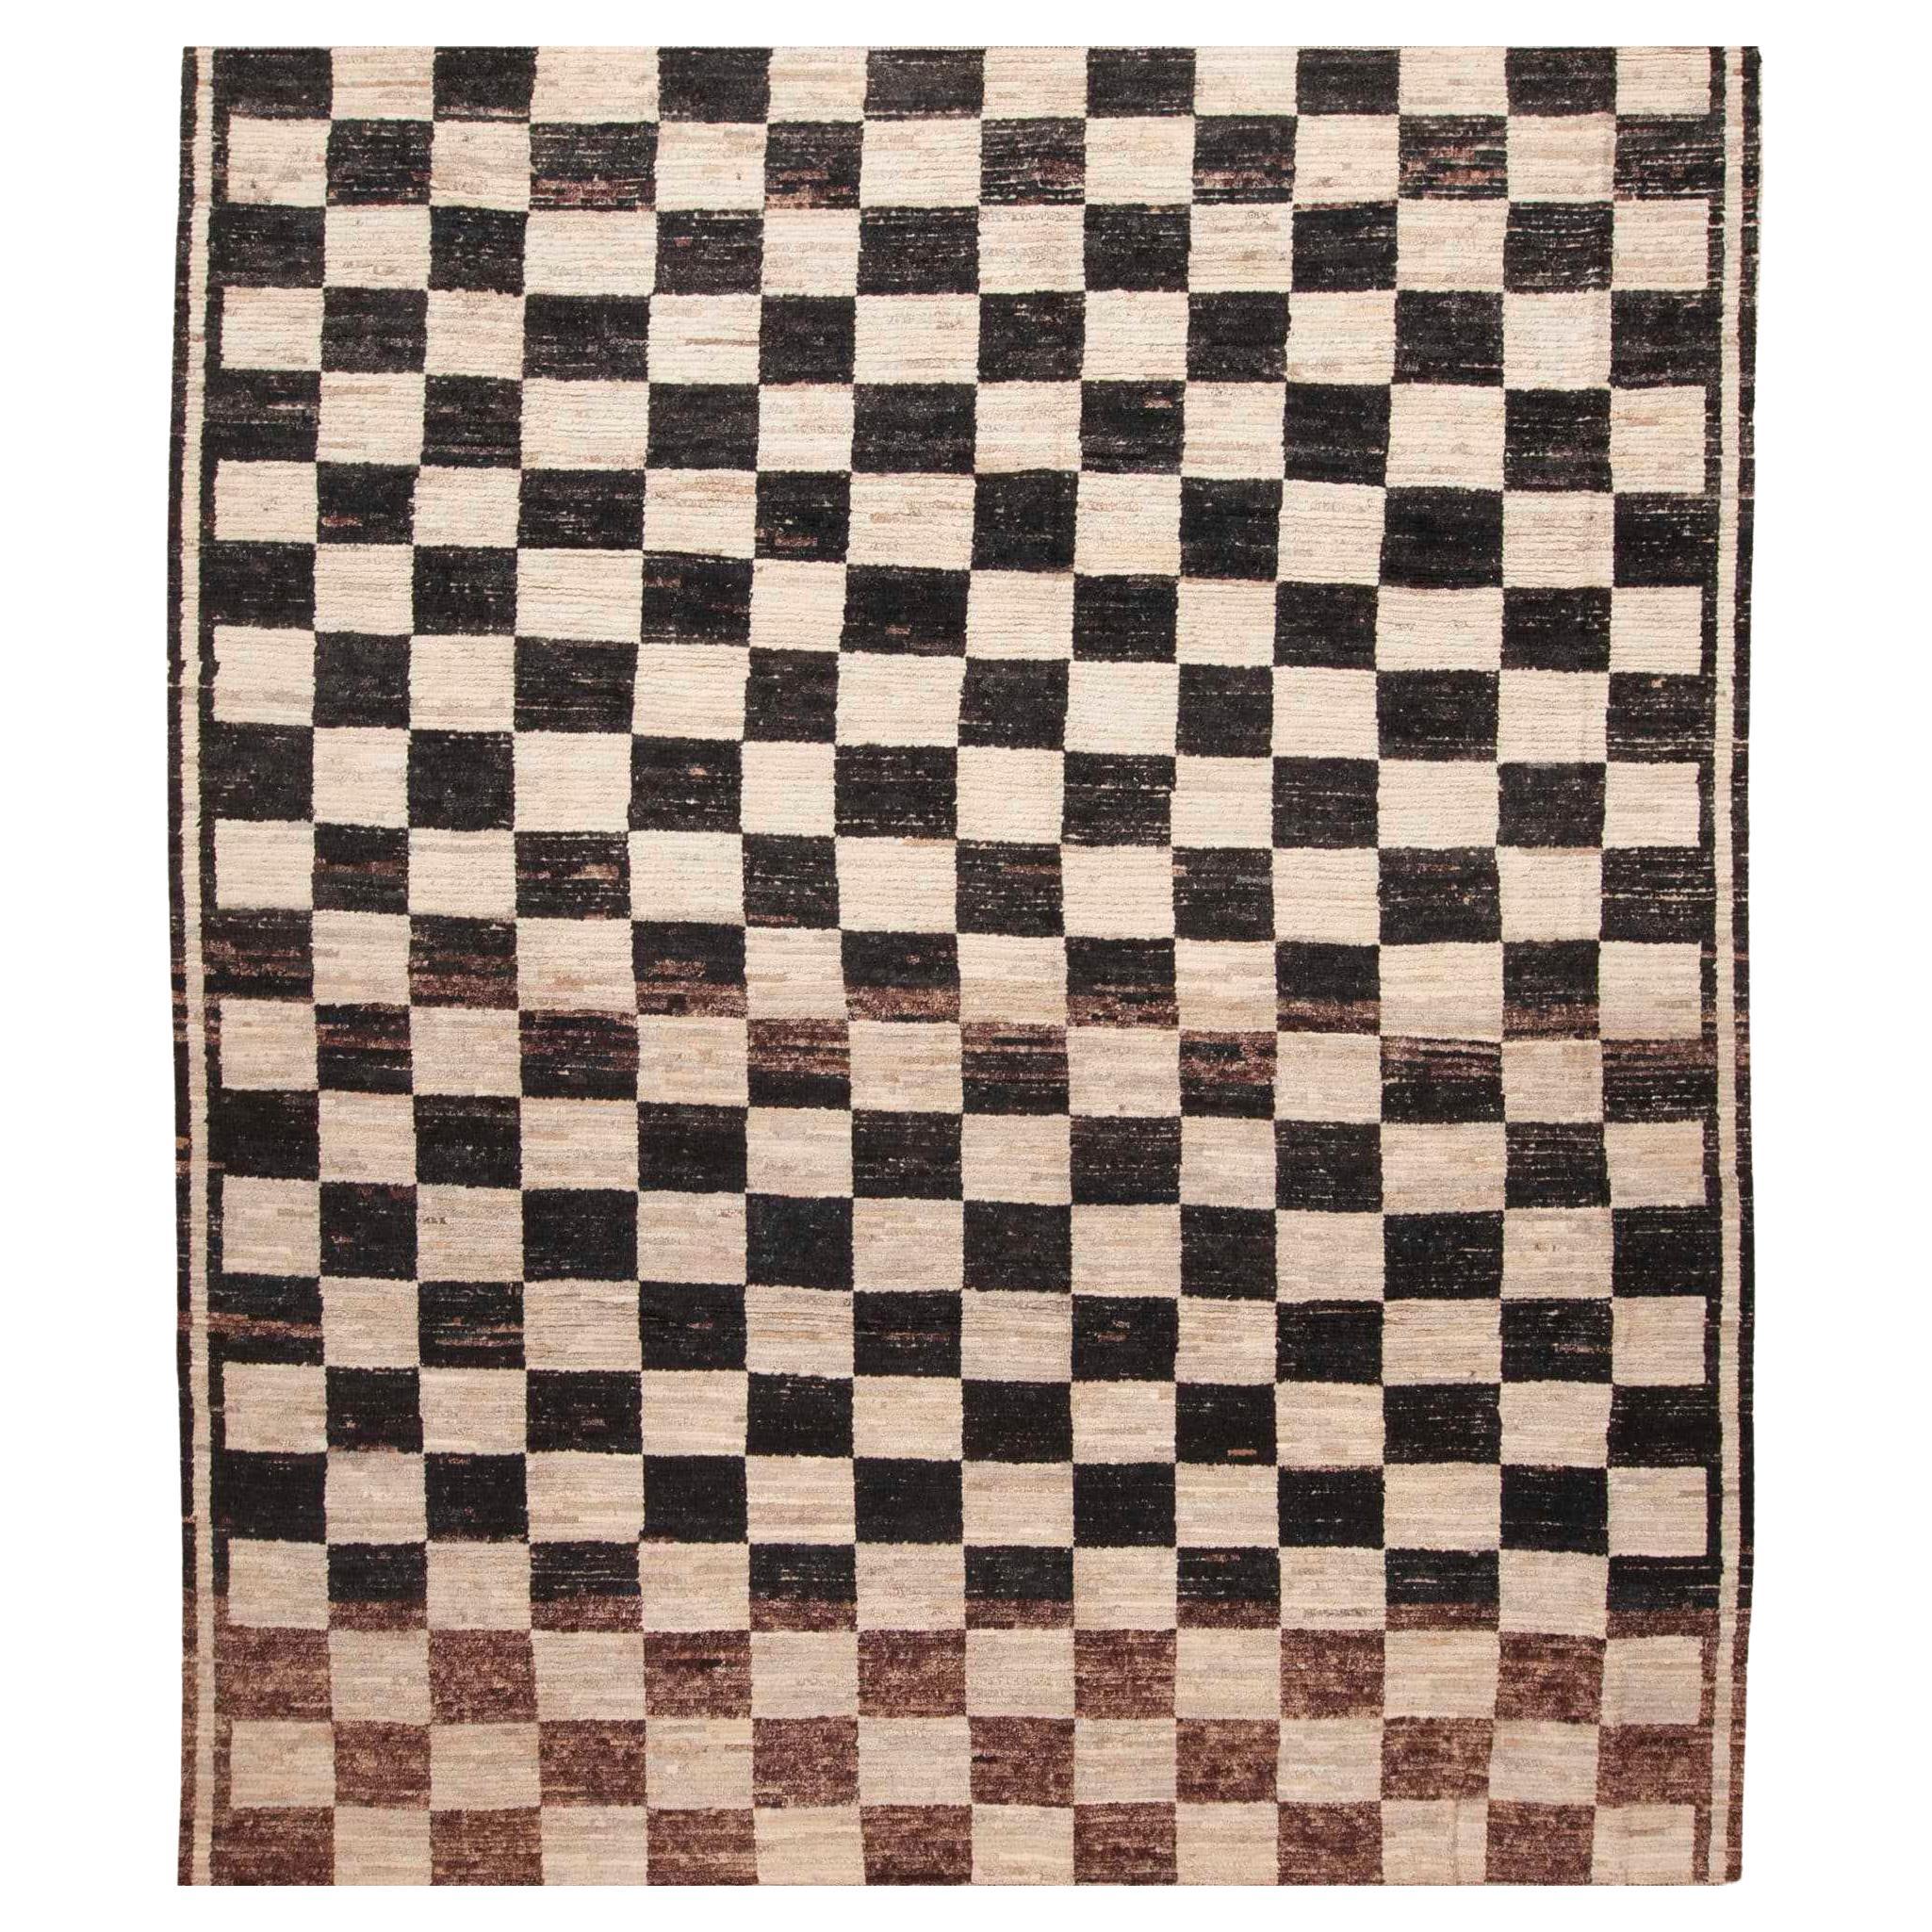 Nazmiyal Collection Tribal Geometric Checkerboard Modern Area Rug 11'7" x 12'5"